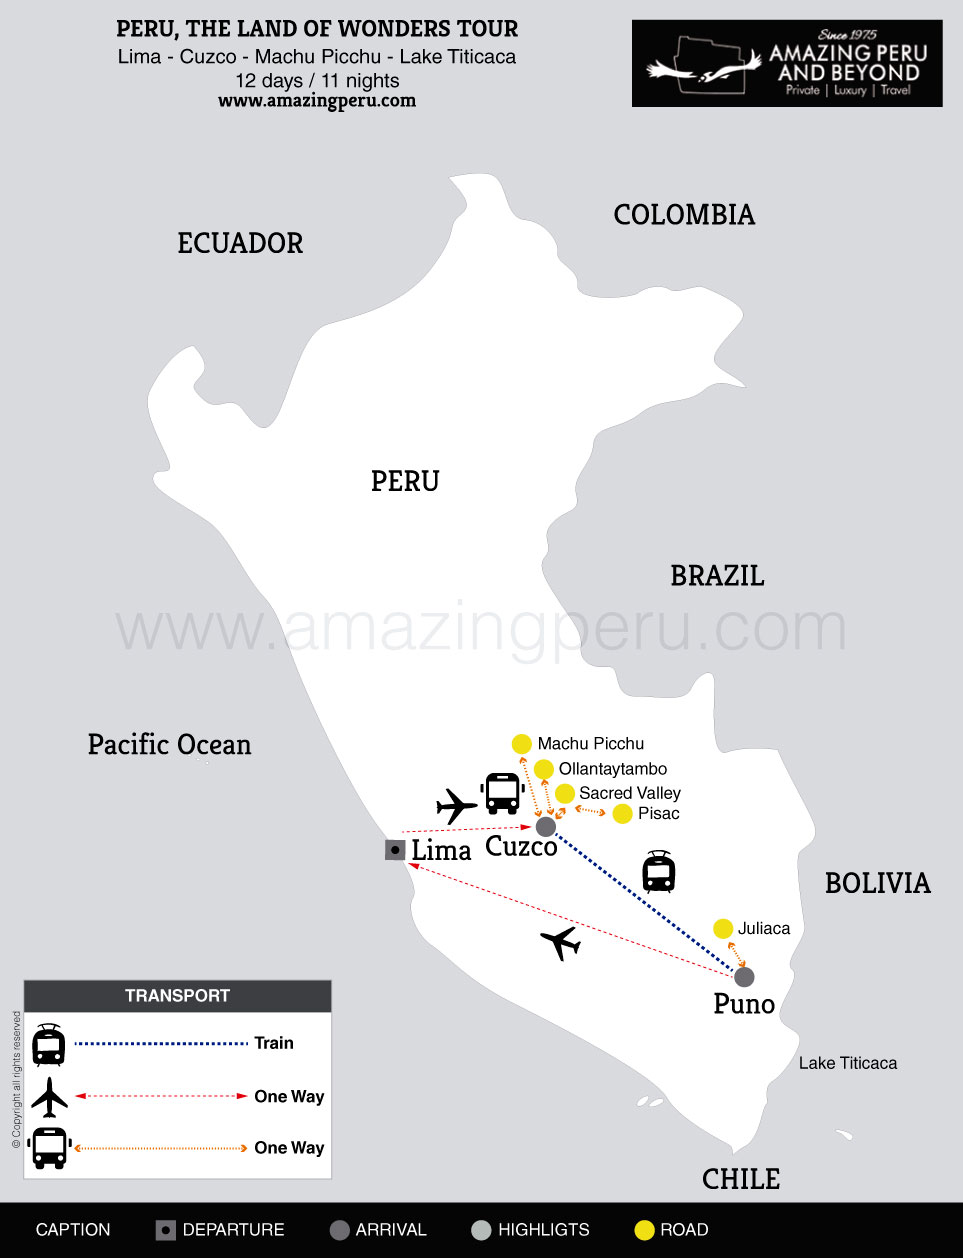 2023 Peru, the Land of wonders tour - 12 days / 11 nights.